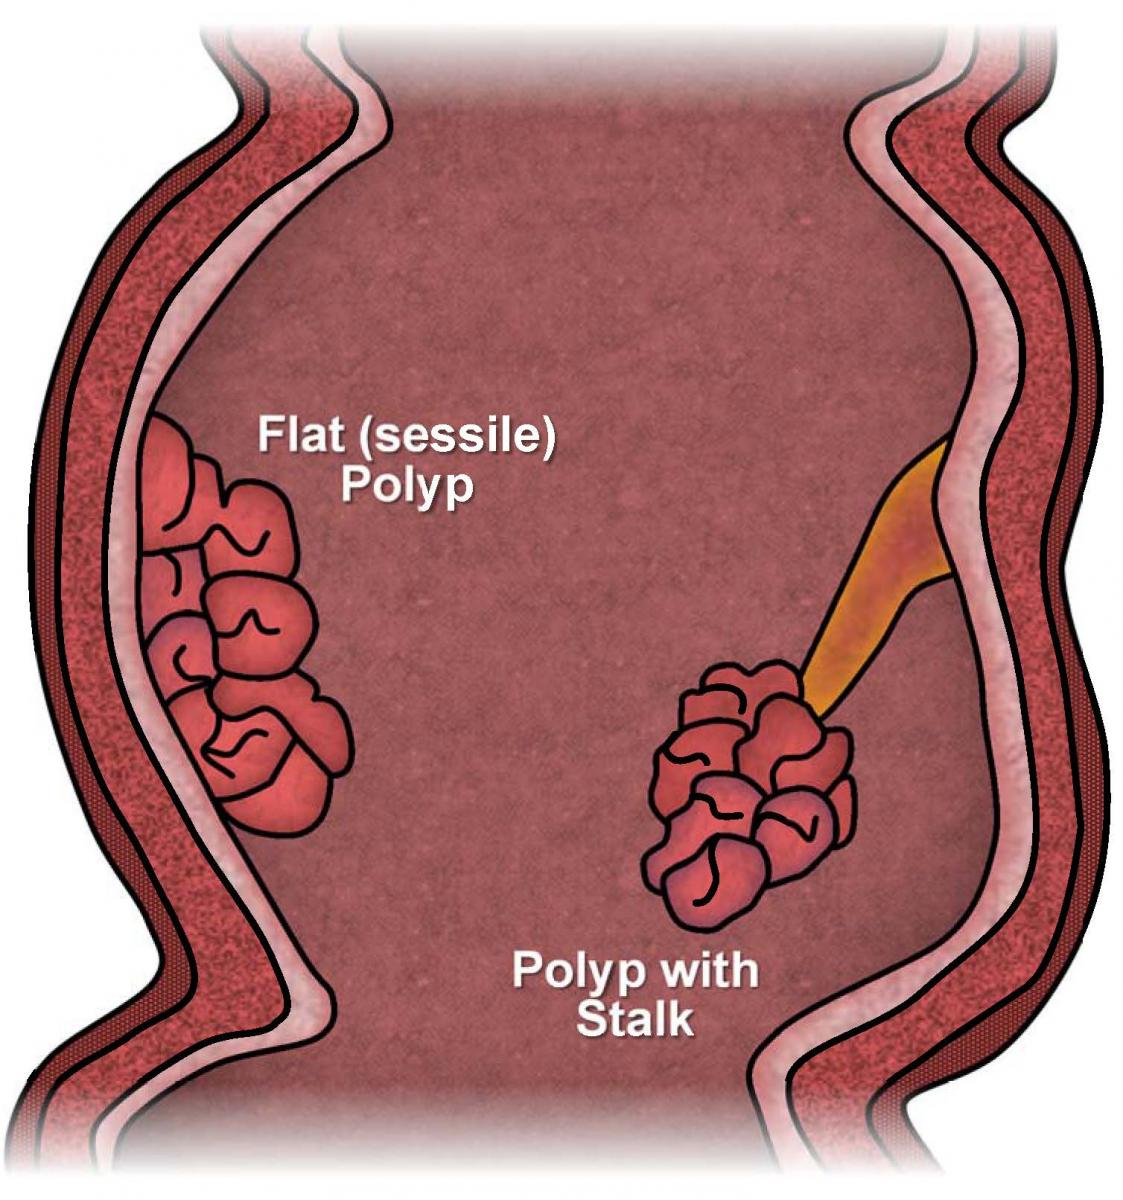 hpv colon polyps